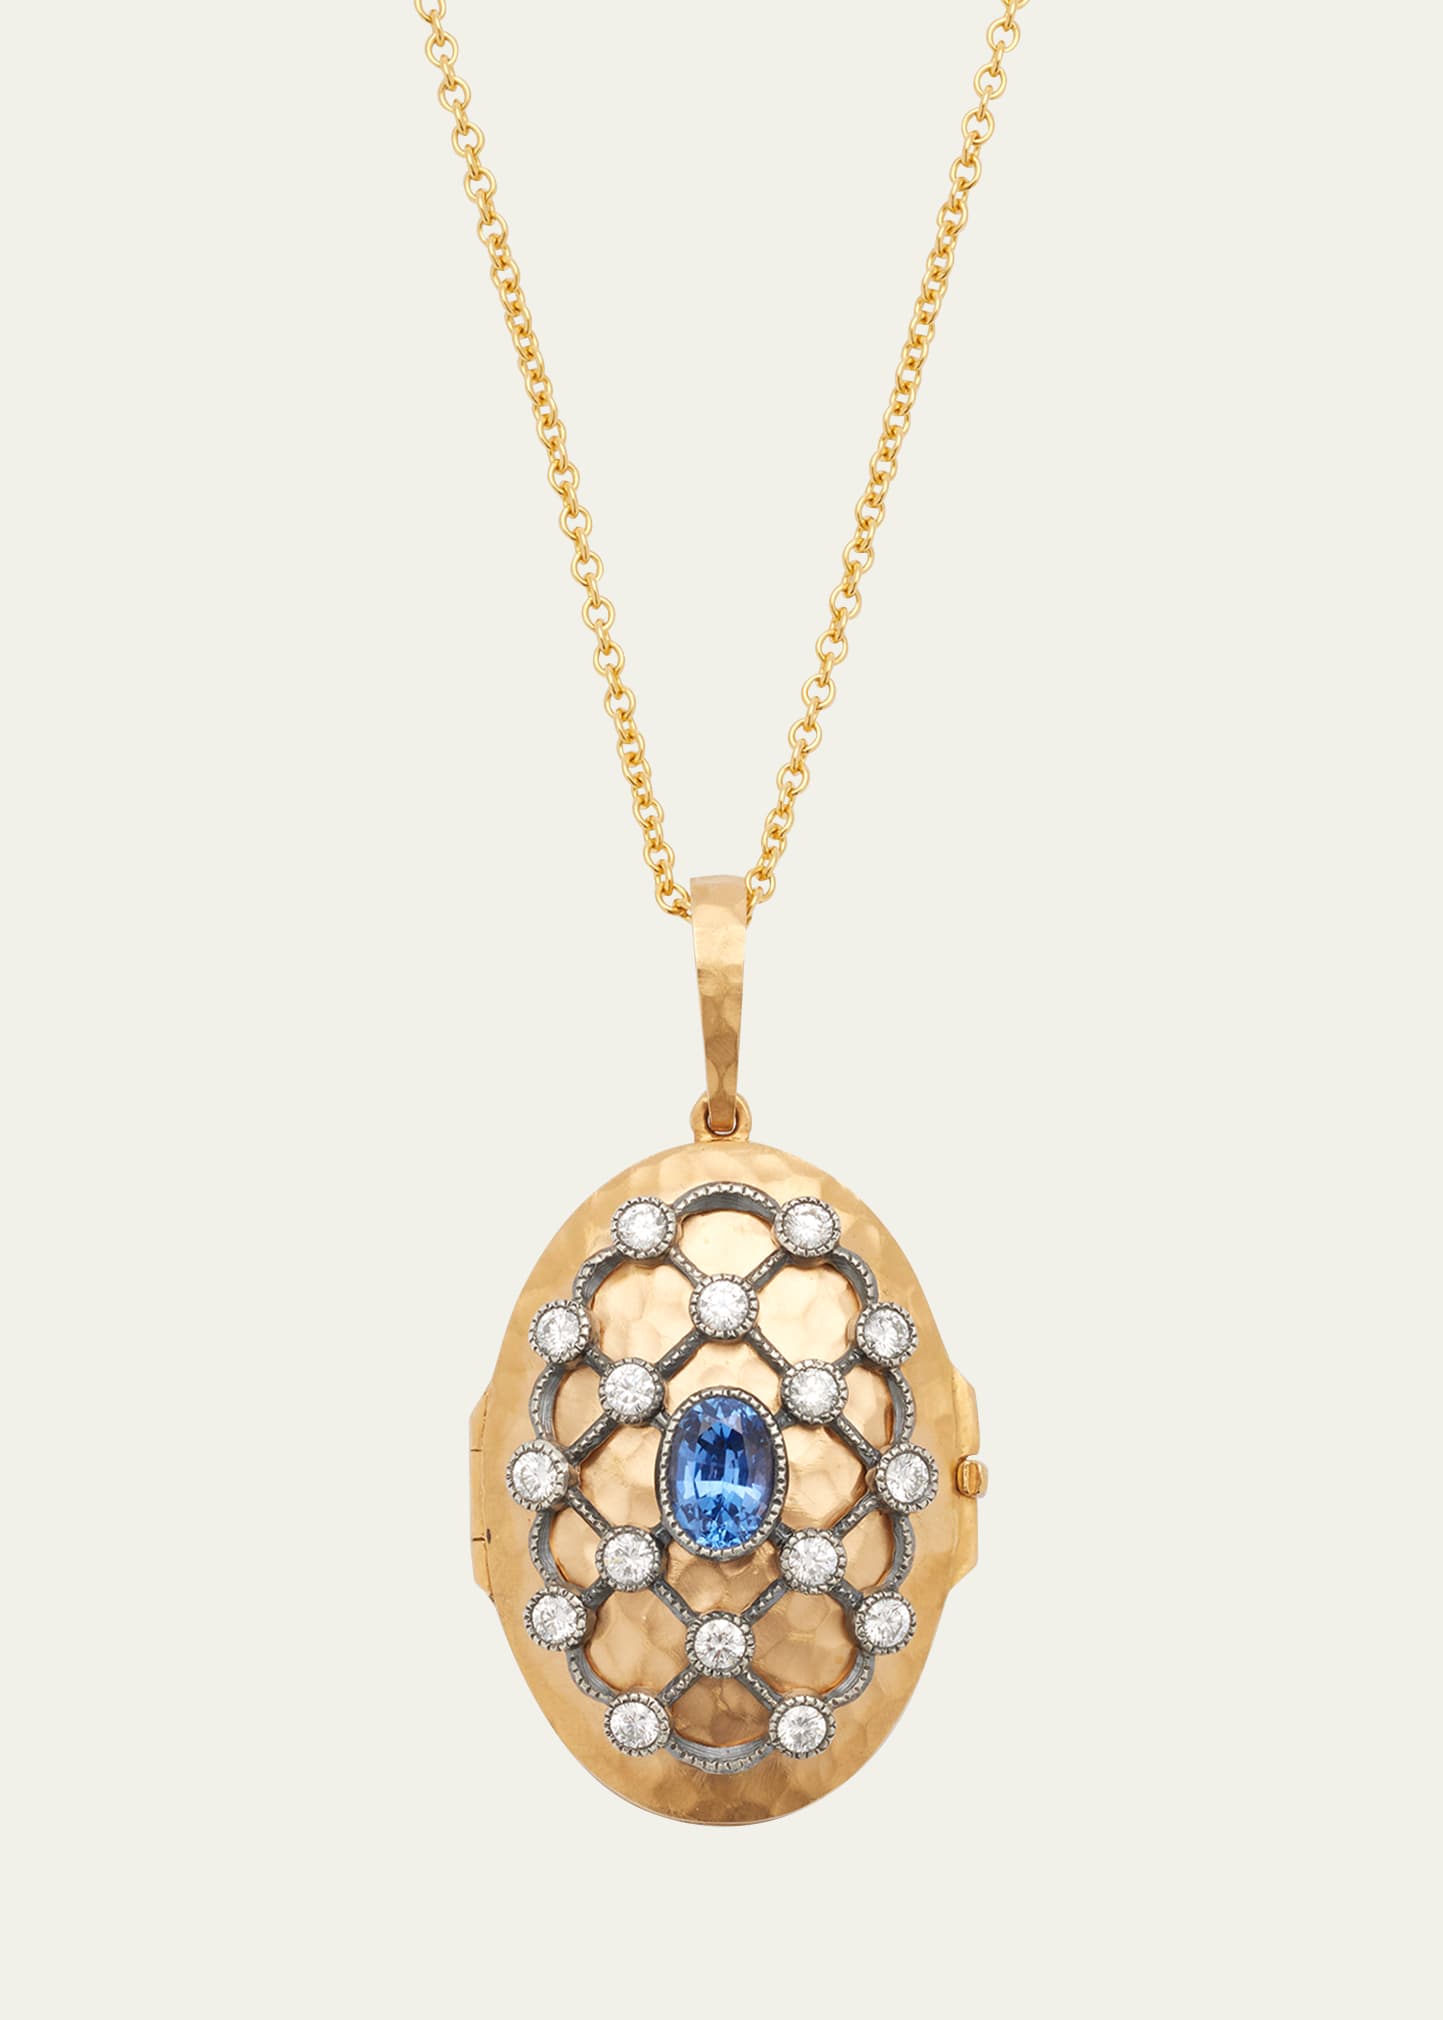 Arman Sarkisyan Lattice Locket Necklace with Blue Sapphire and Diamonds